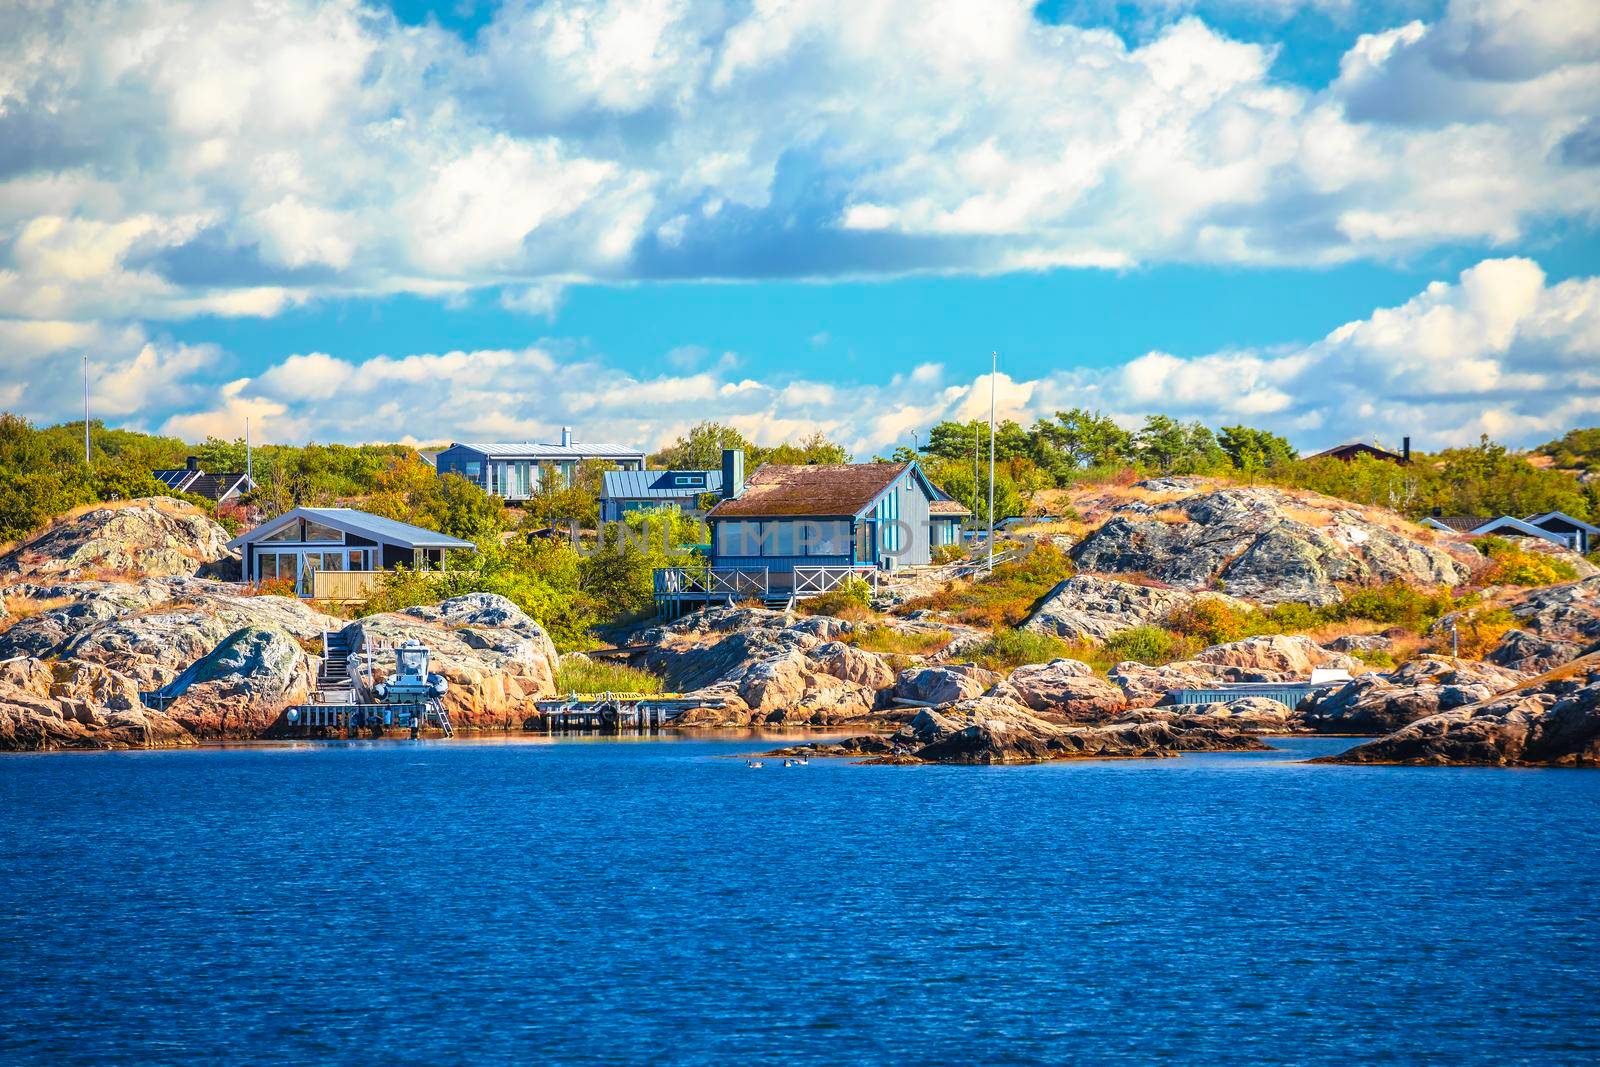 Gothenburg archipelago islands waterfront view by xbrchx